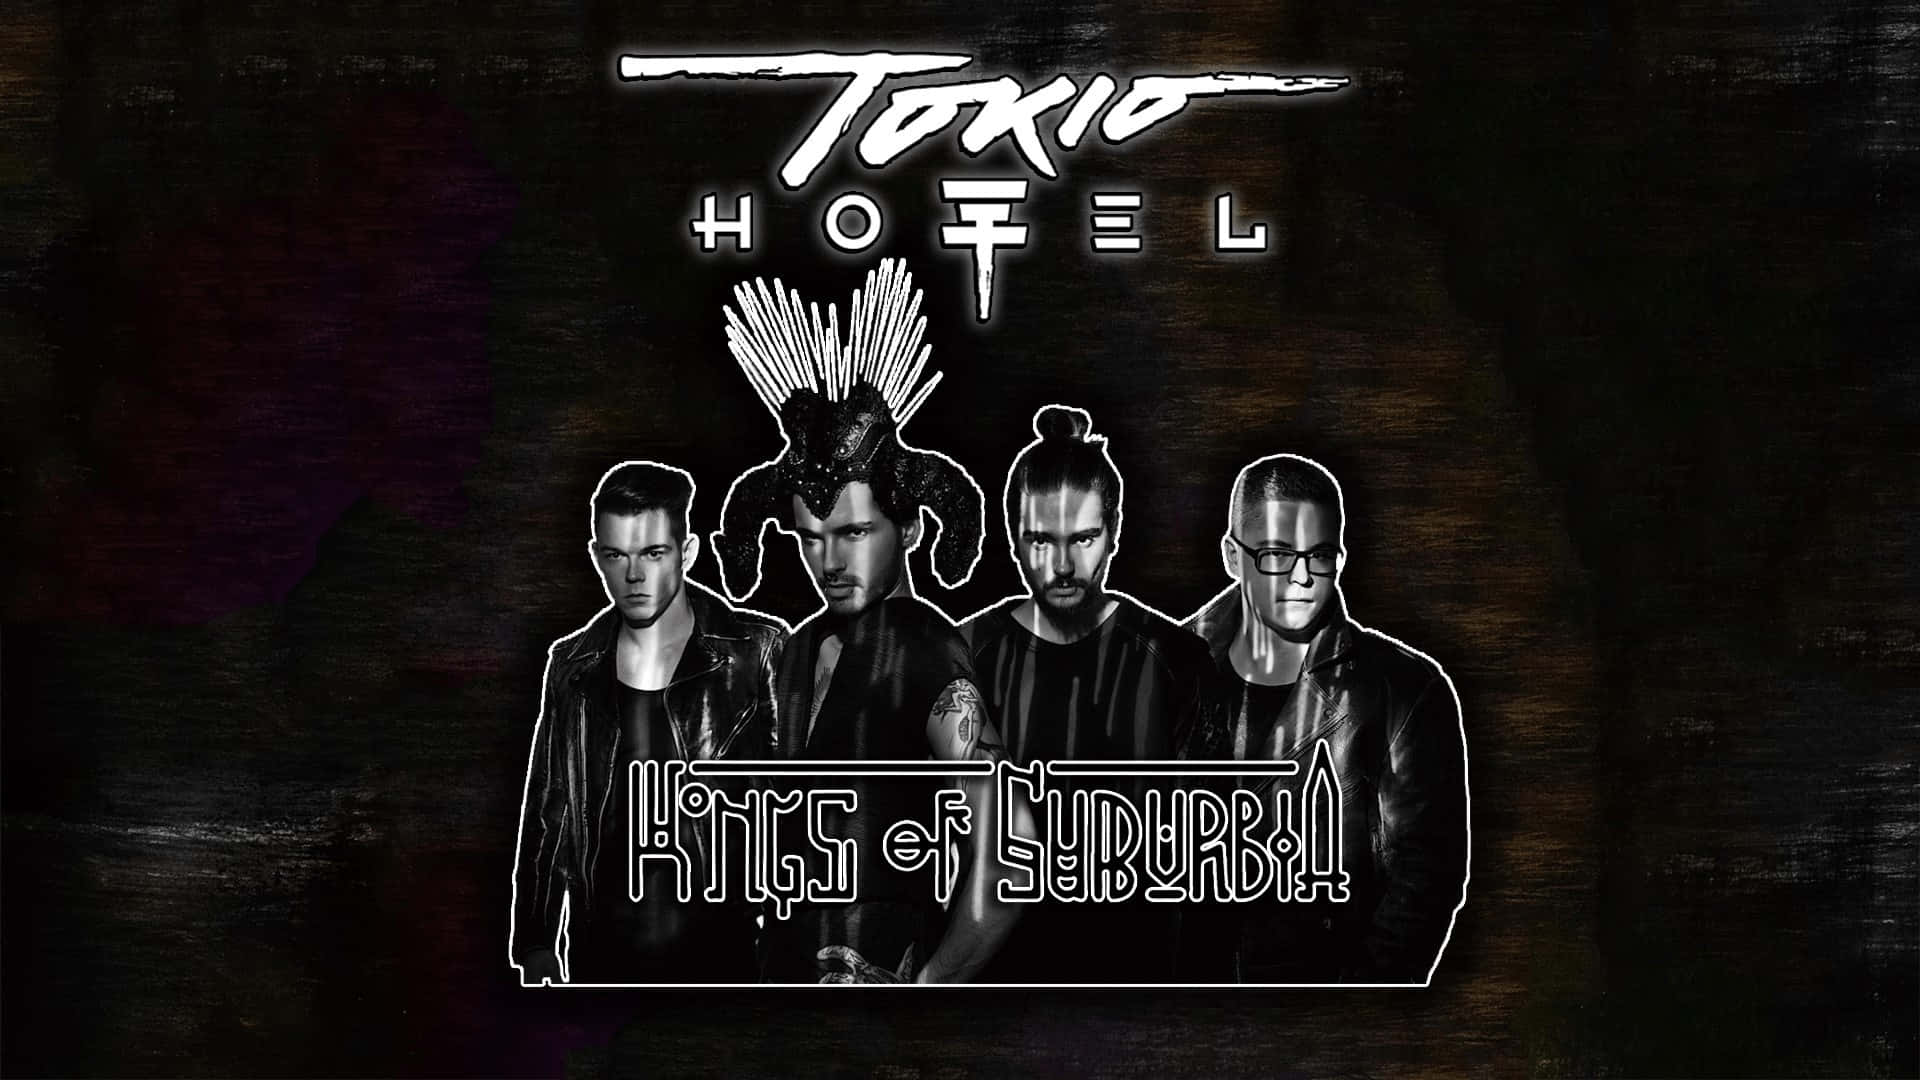 Tokio Hotel Kingsof Suburbia Promotional Artwork Wallpaper